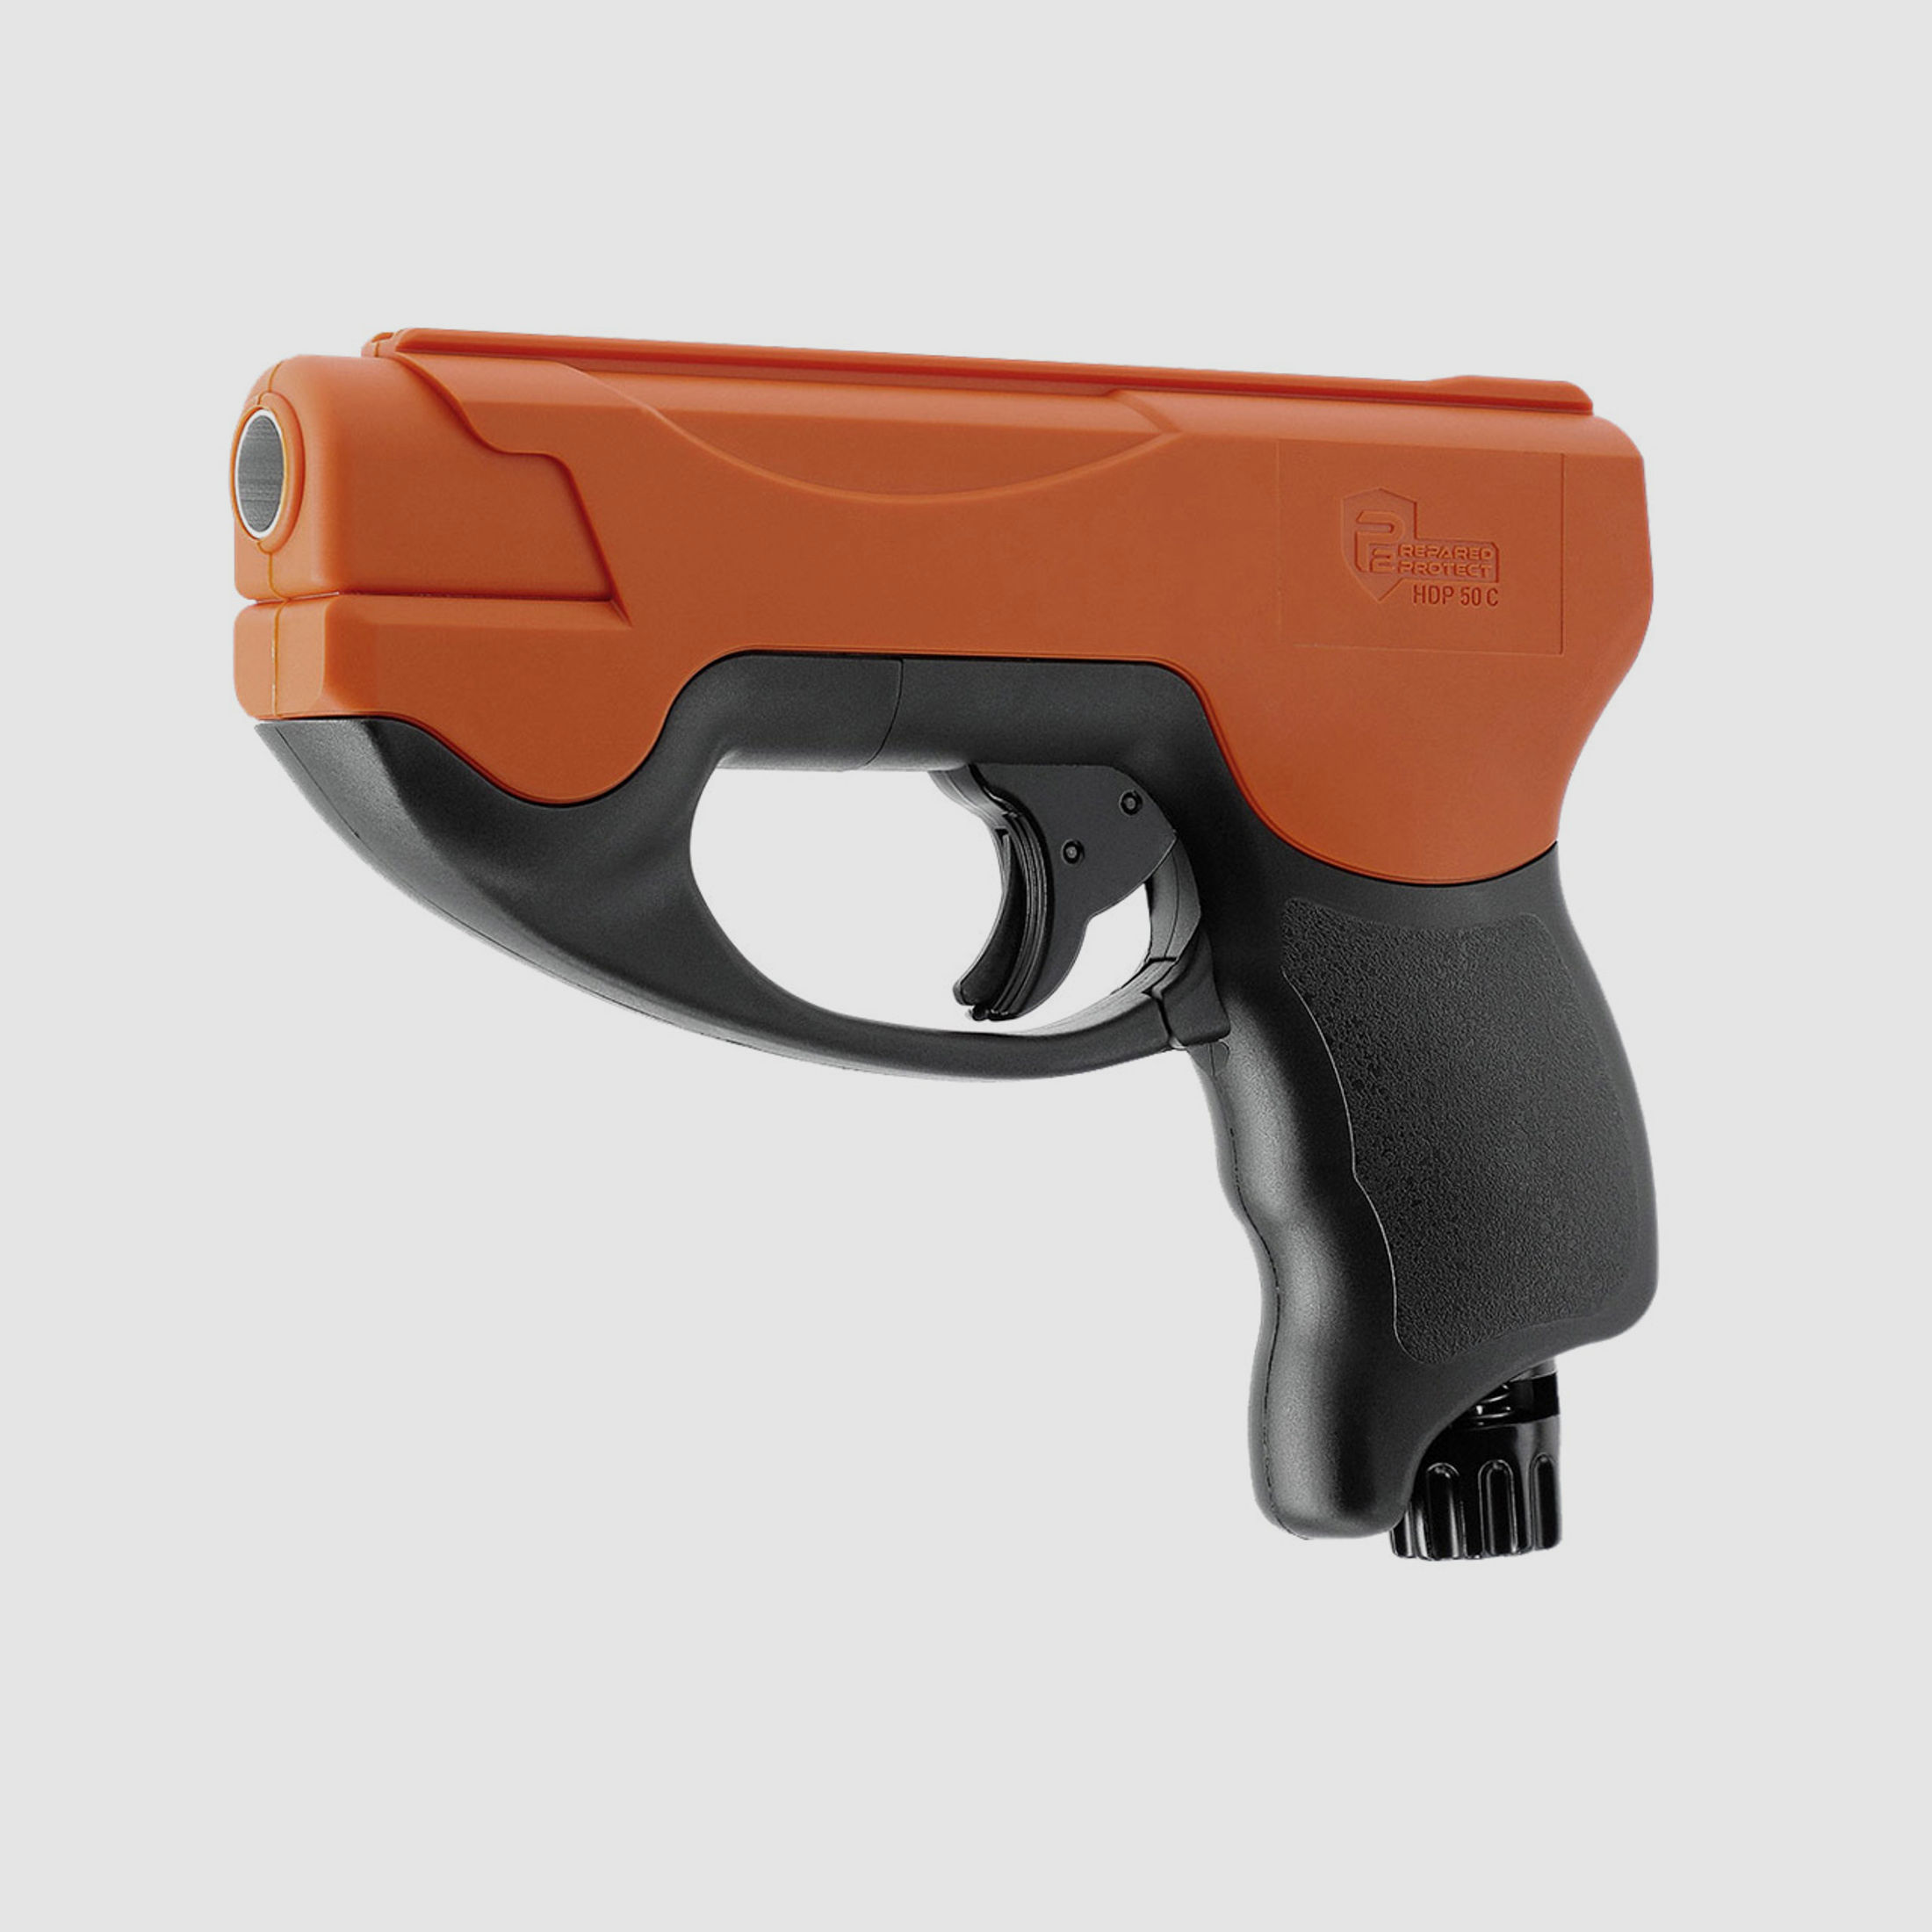 CO2 Markierer Home Defense Pistole Umarex P2P HDP 50 Compact u.a. fĂĽr Gummi-, Pfeffer- und Farbkugeln Kaliber .50 (P18)